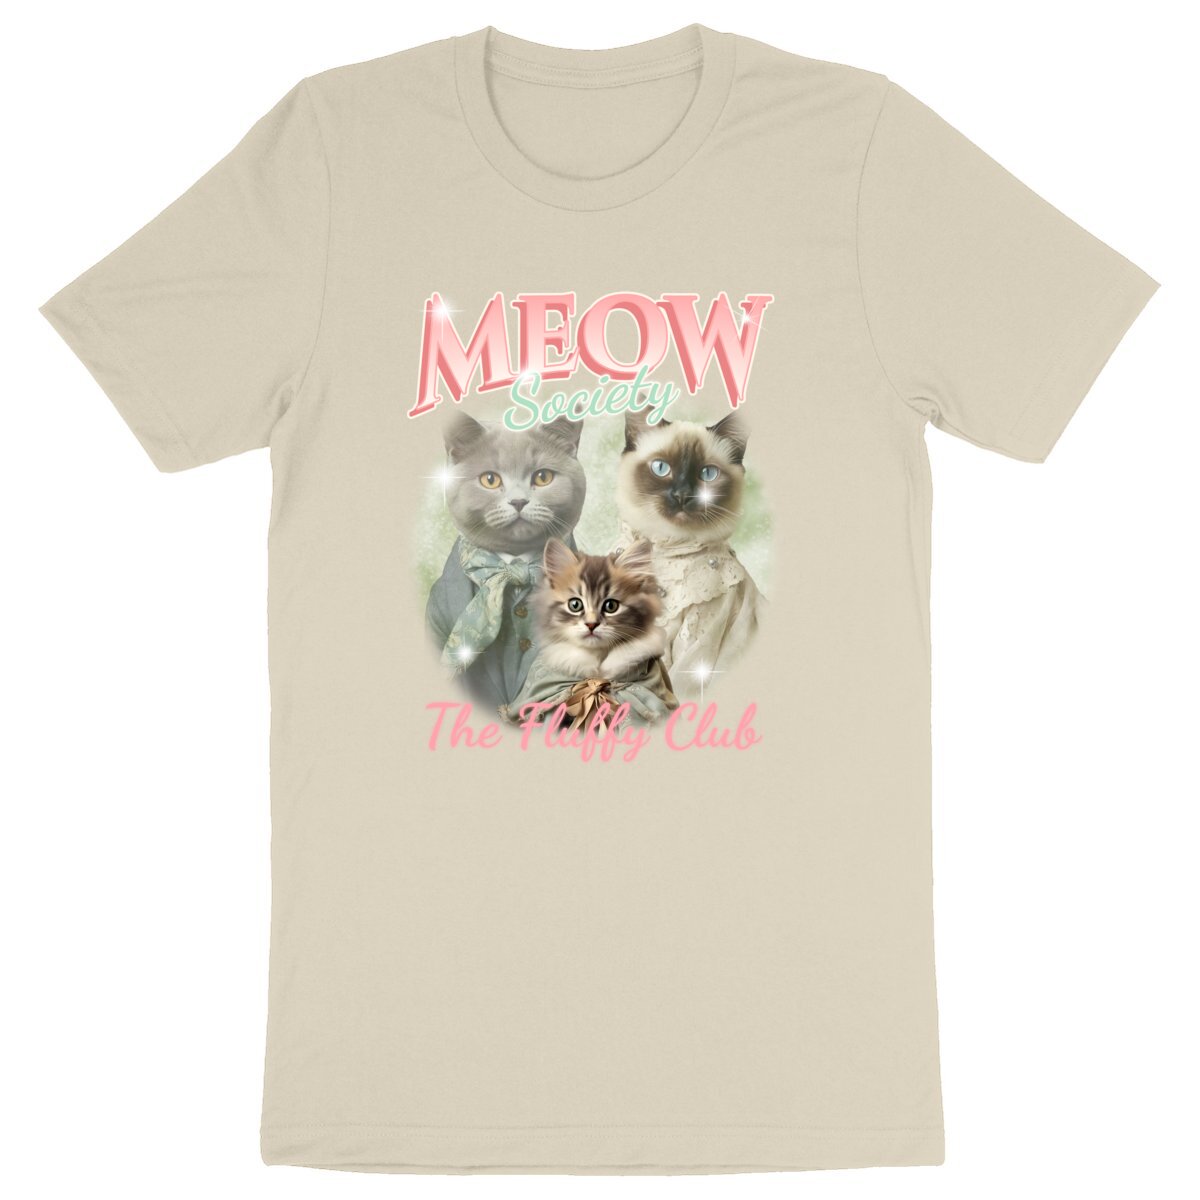 Meow Society - Organic T-shirt